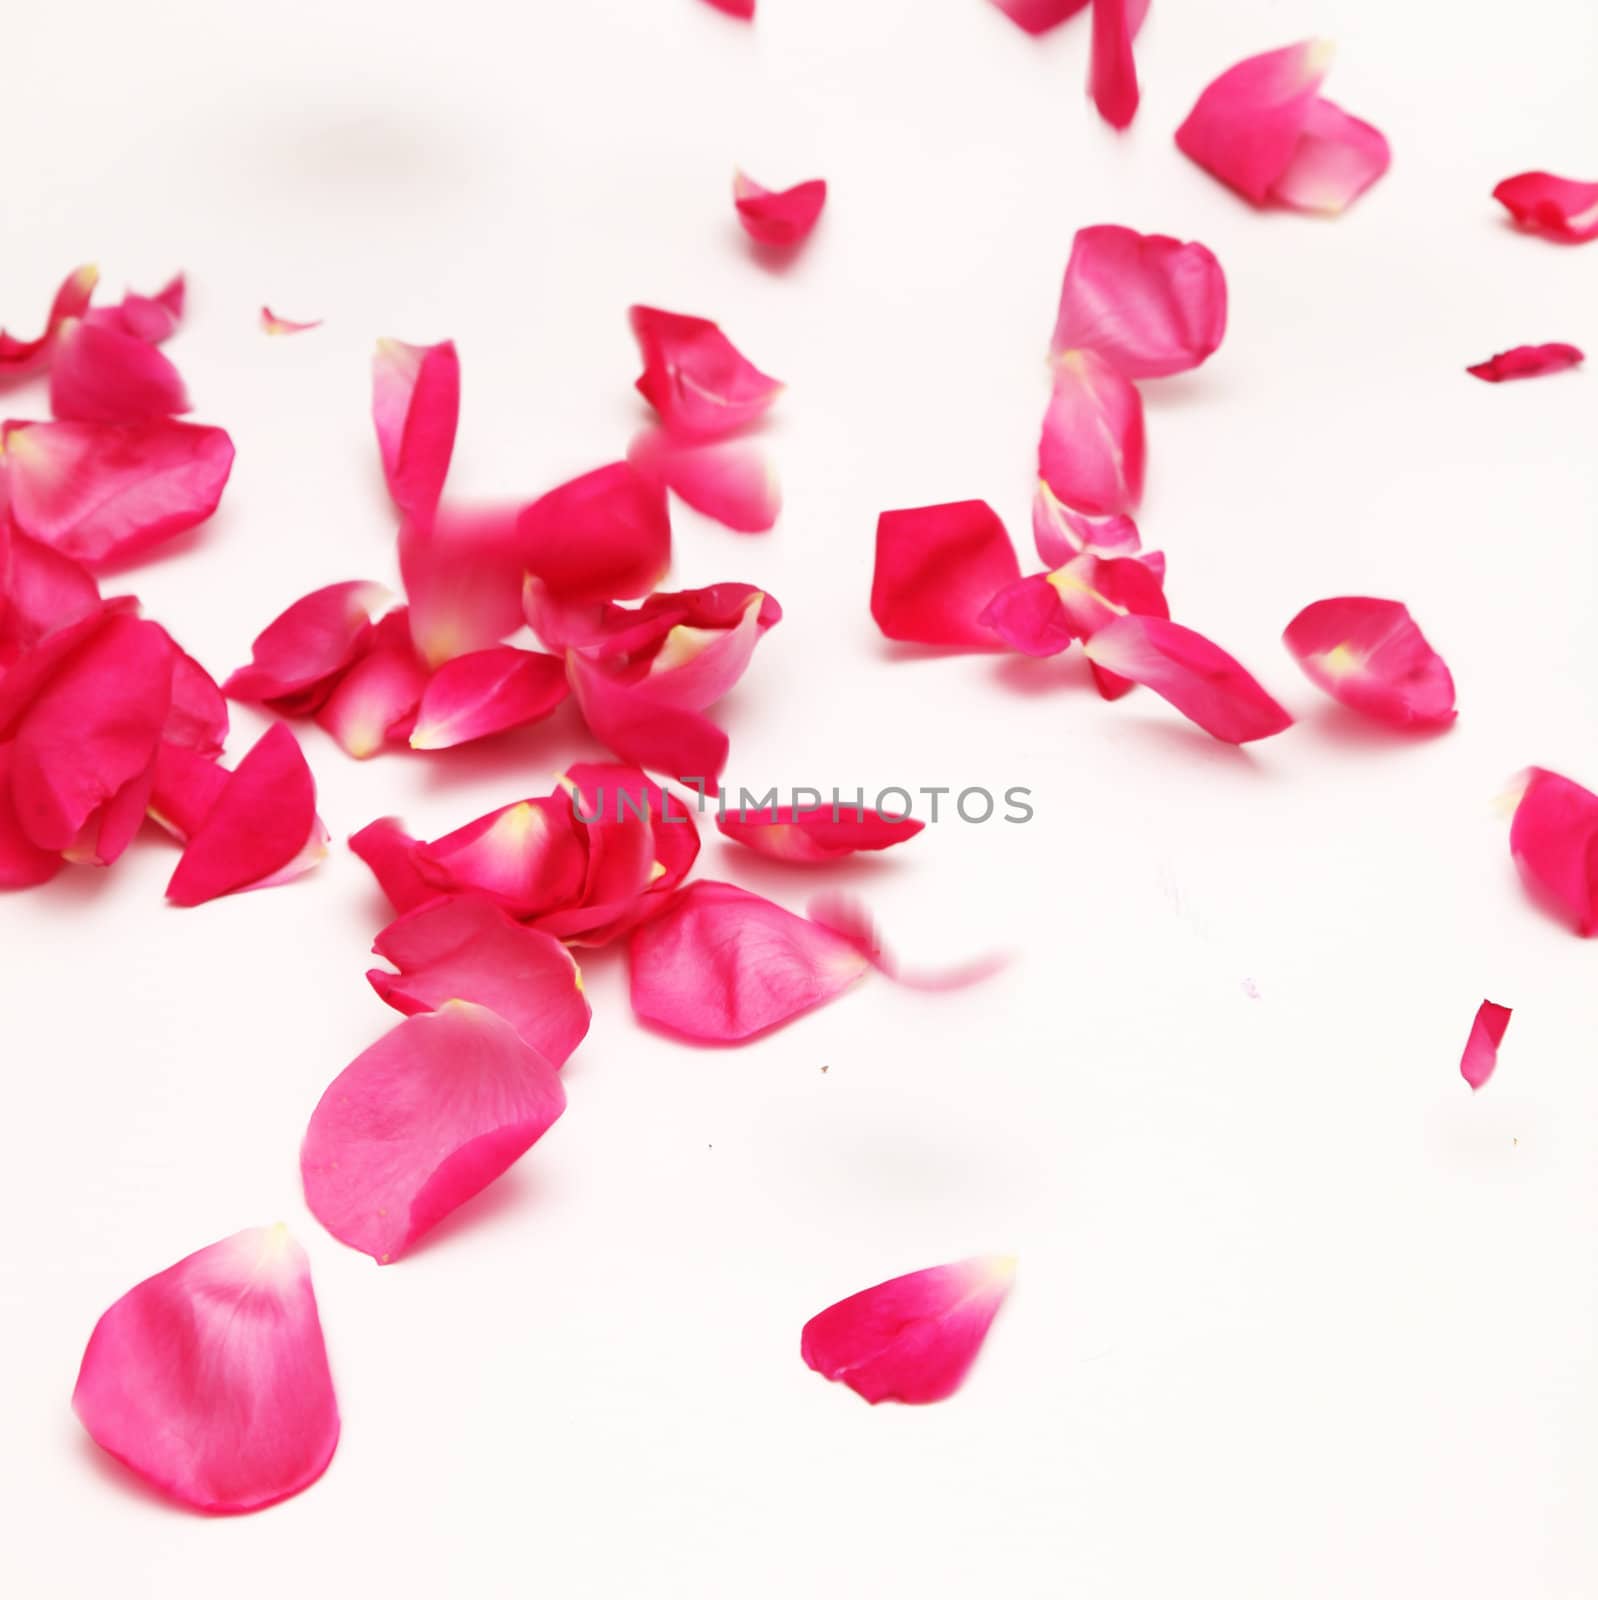 flying rose petals by Farina6000